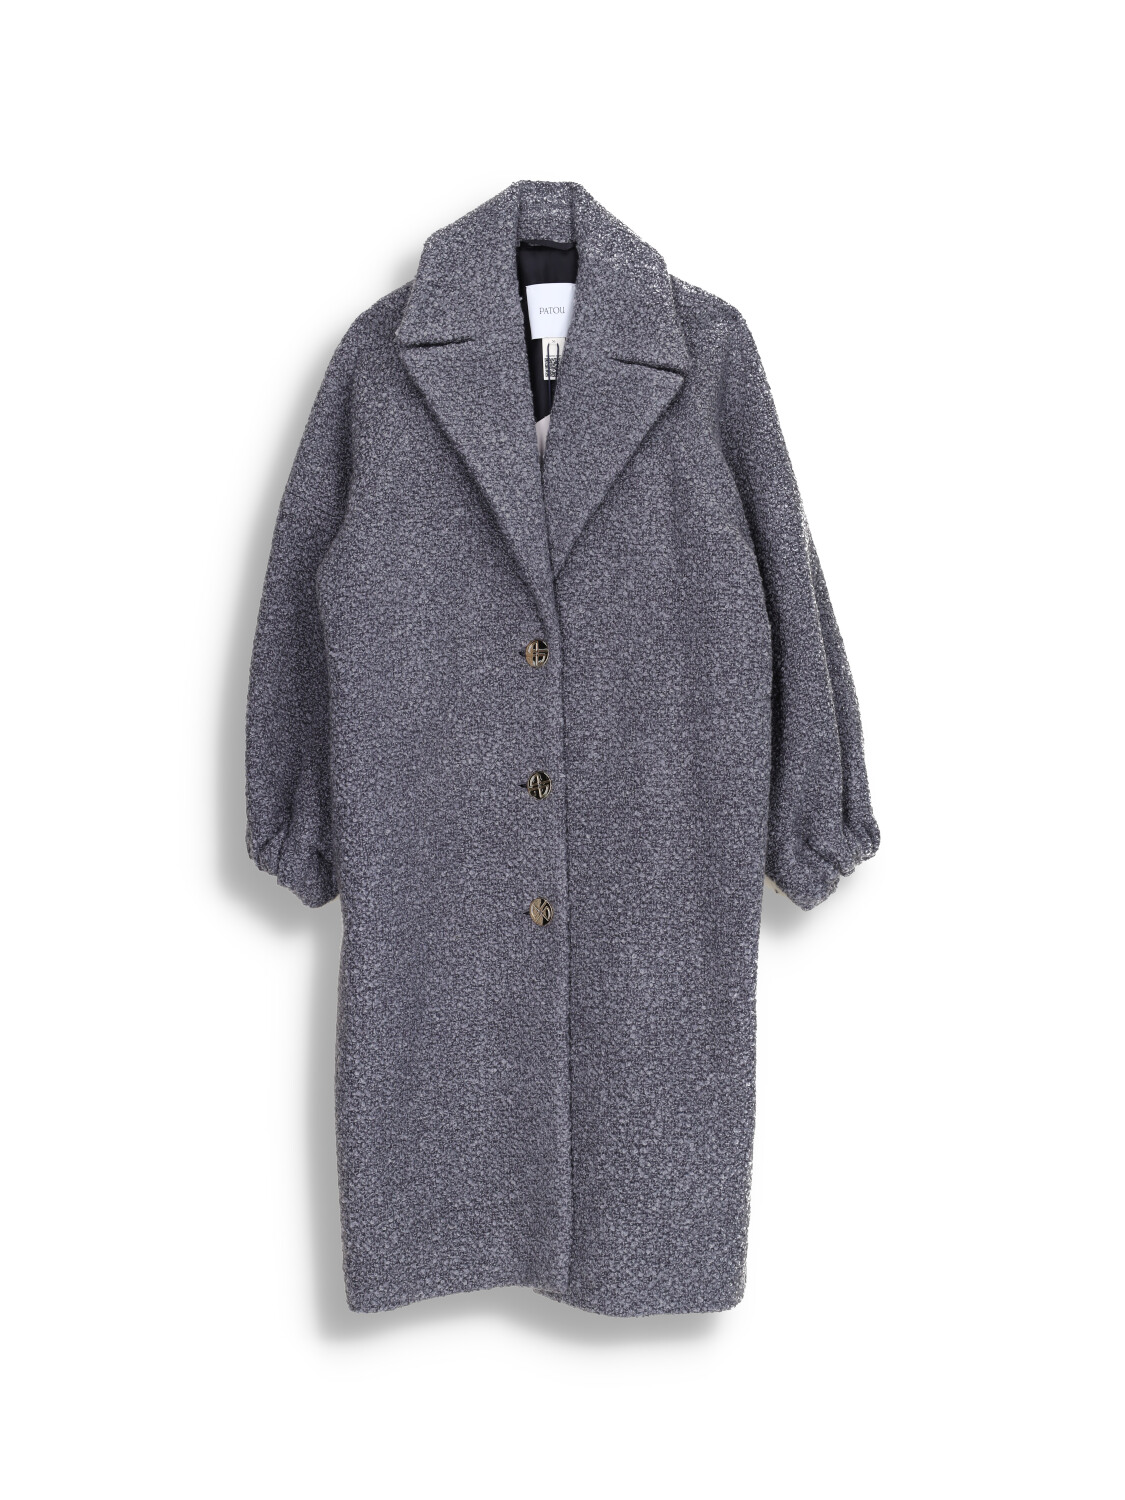 Elliptic Coat - New wool coat